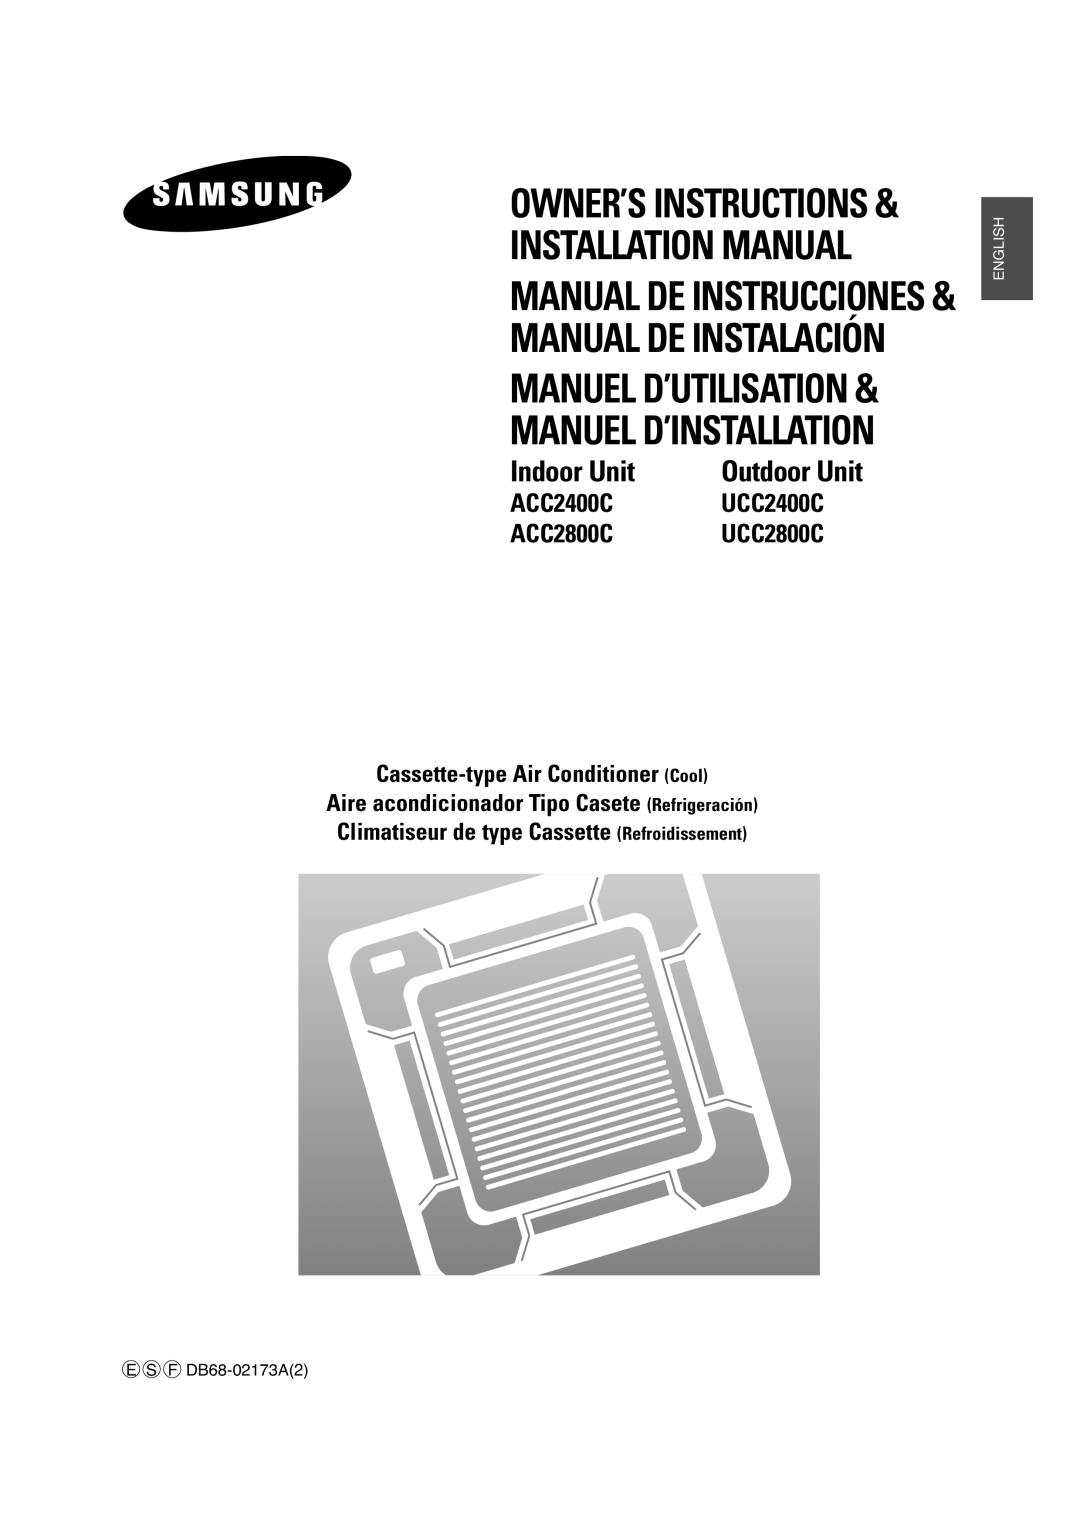 Samsung UCC2400C installation manual ACC2400C, ACC2800C, UCC2800C, Outdoor Unit, Cassette-typeAir Conditioner Cool 